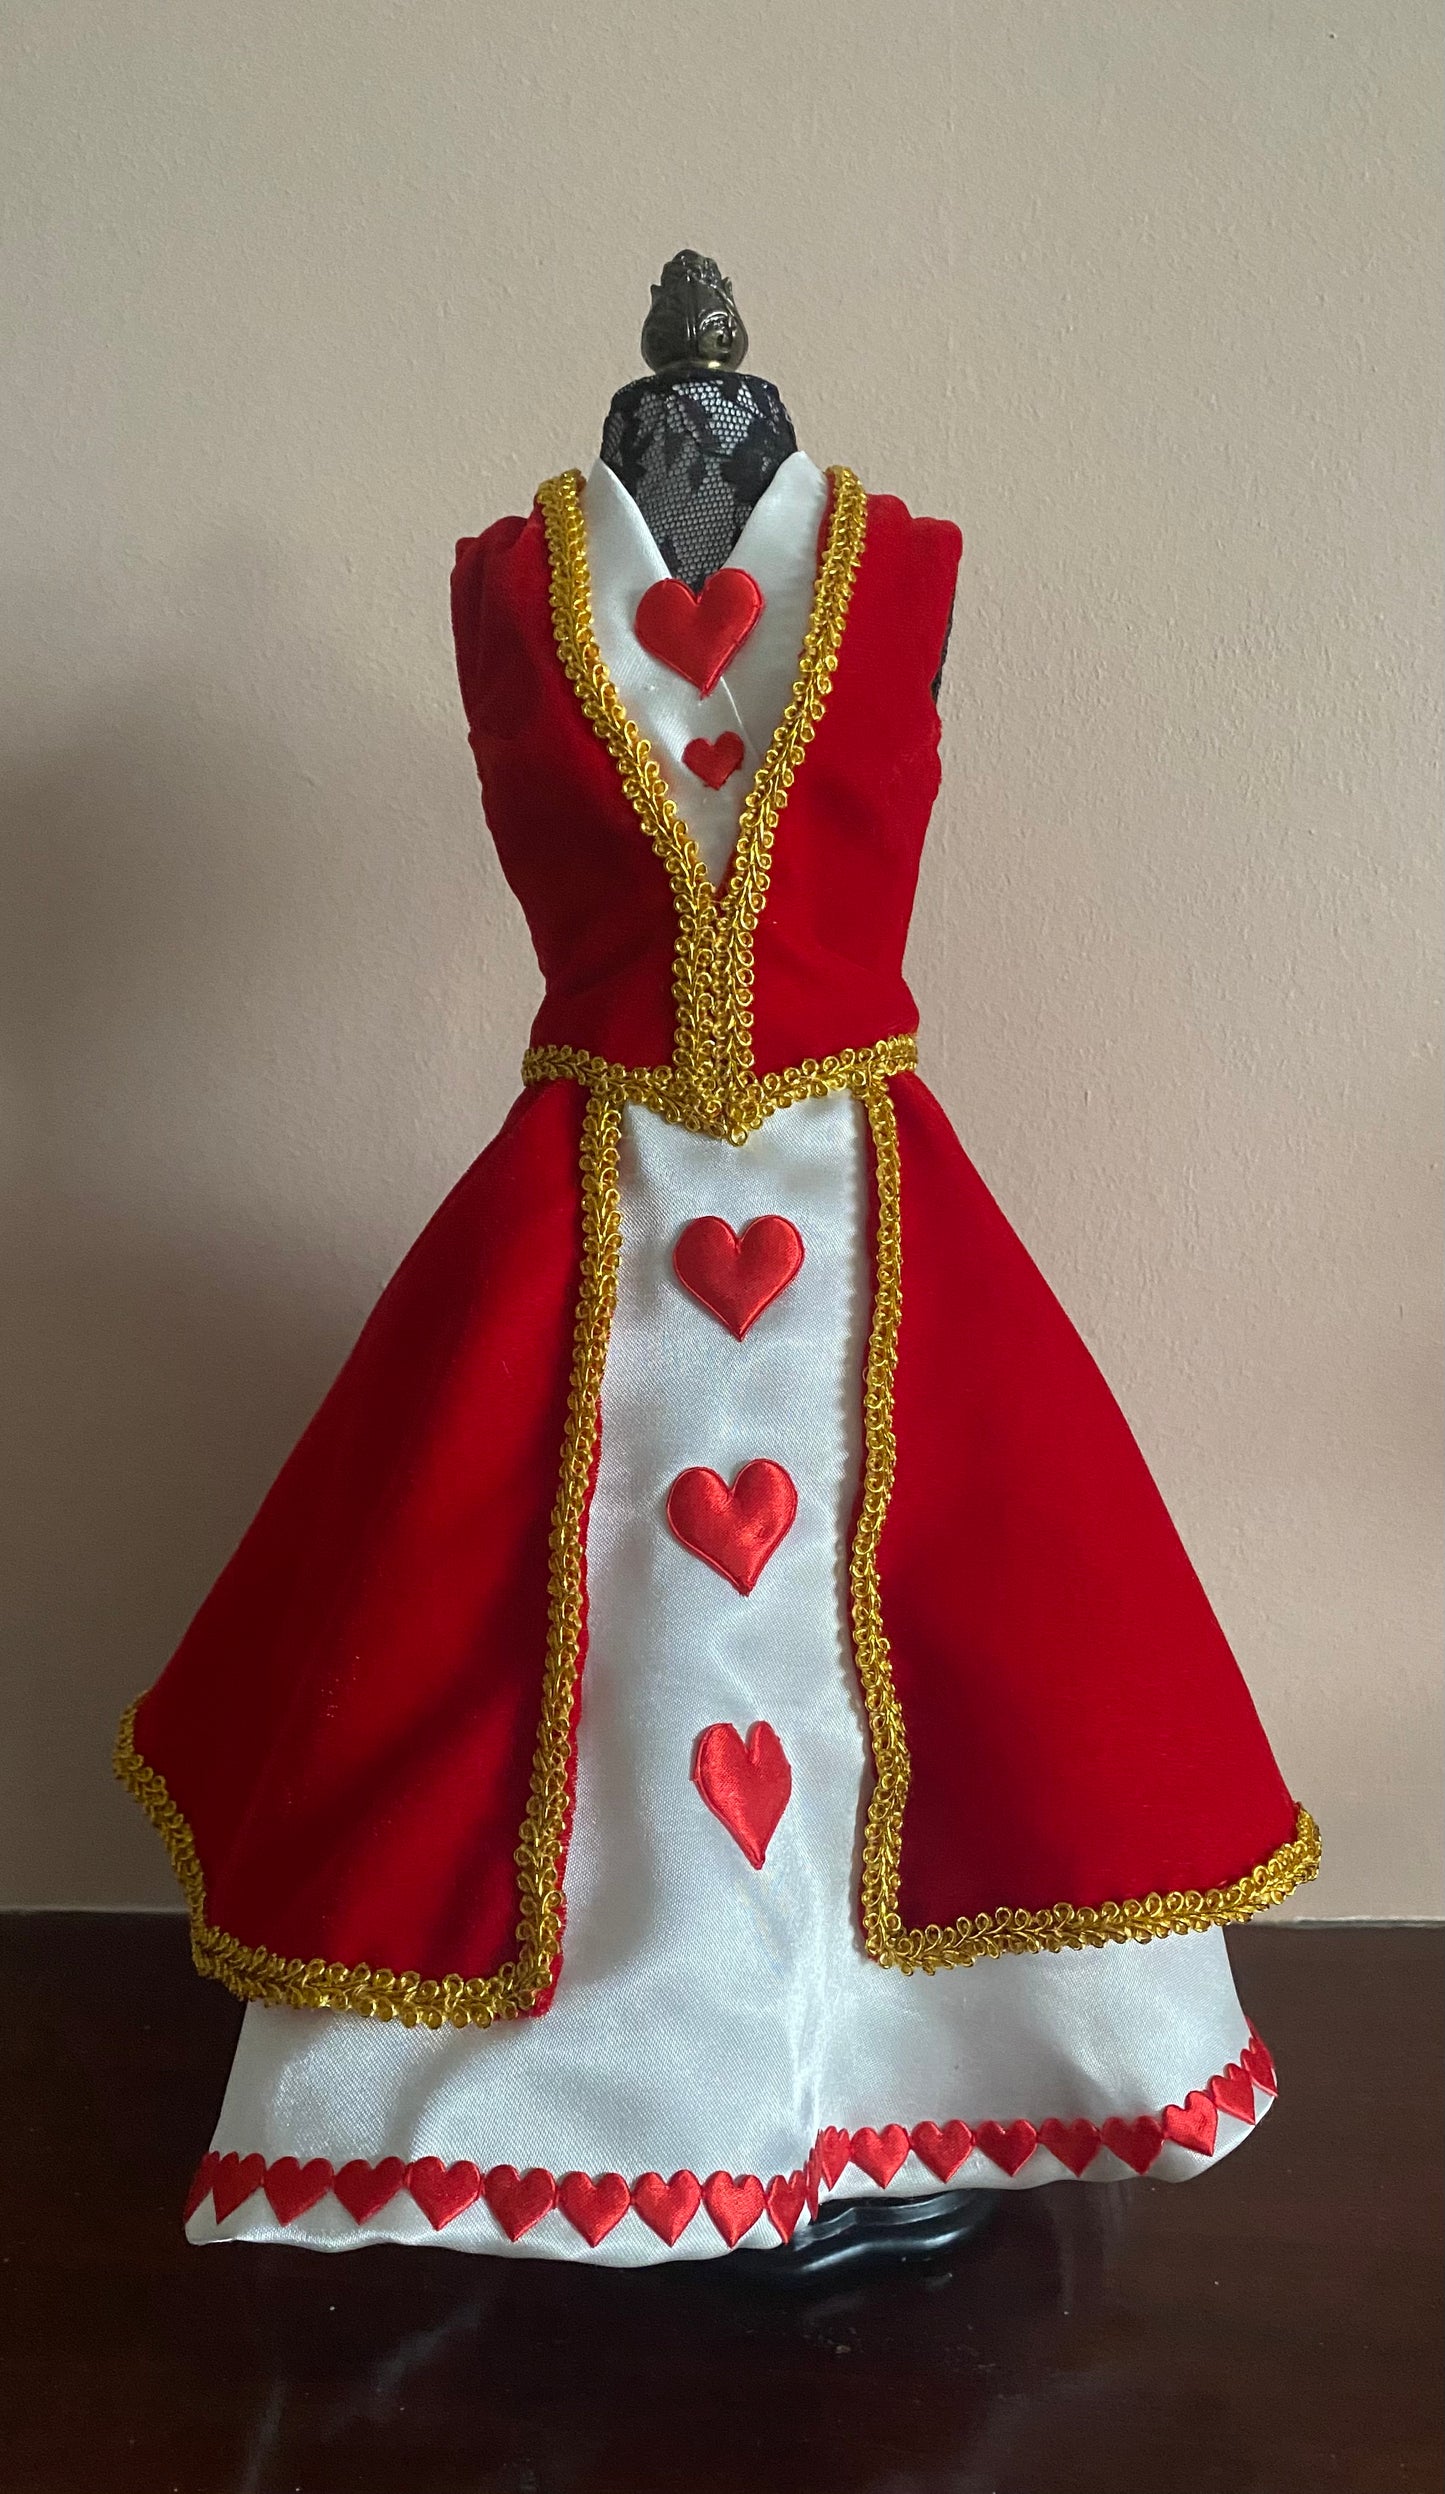 Unique Hand-Sewn Decorative Mannequin - Queen of Hearts